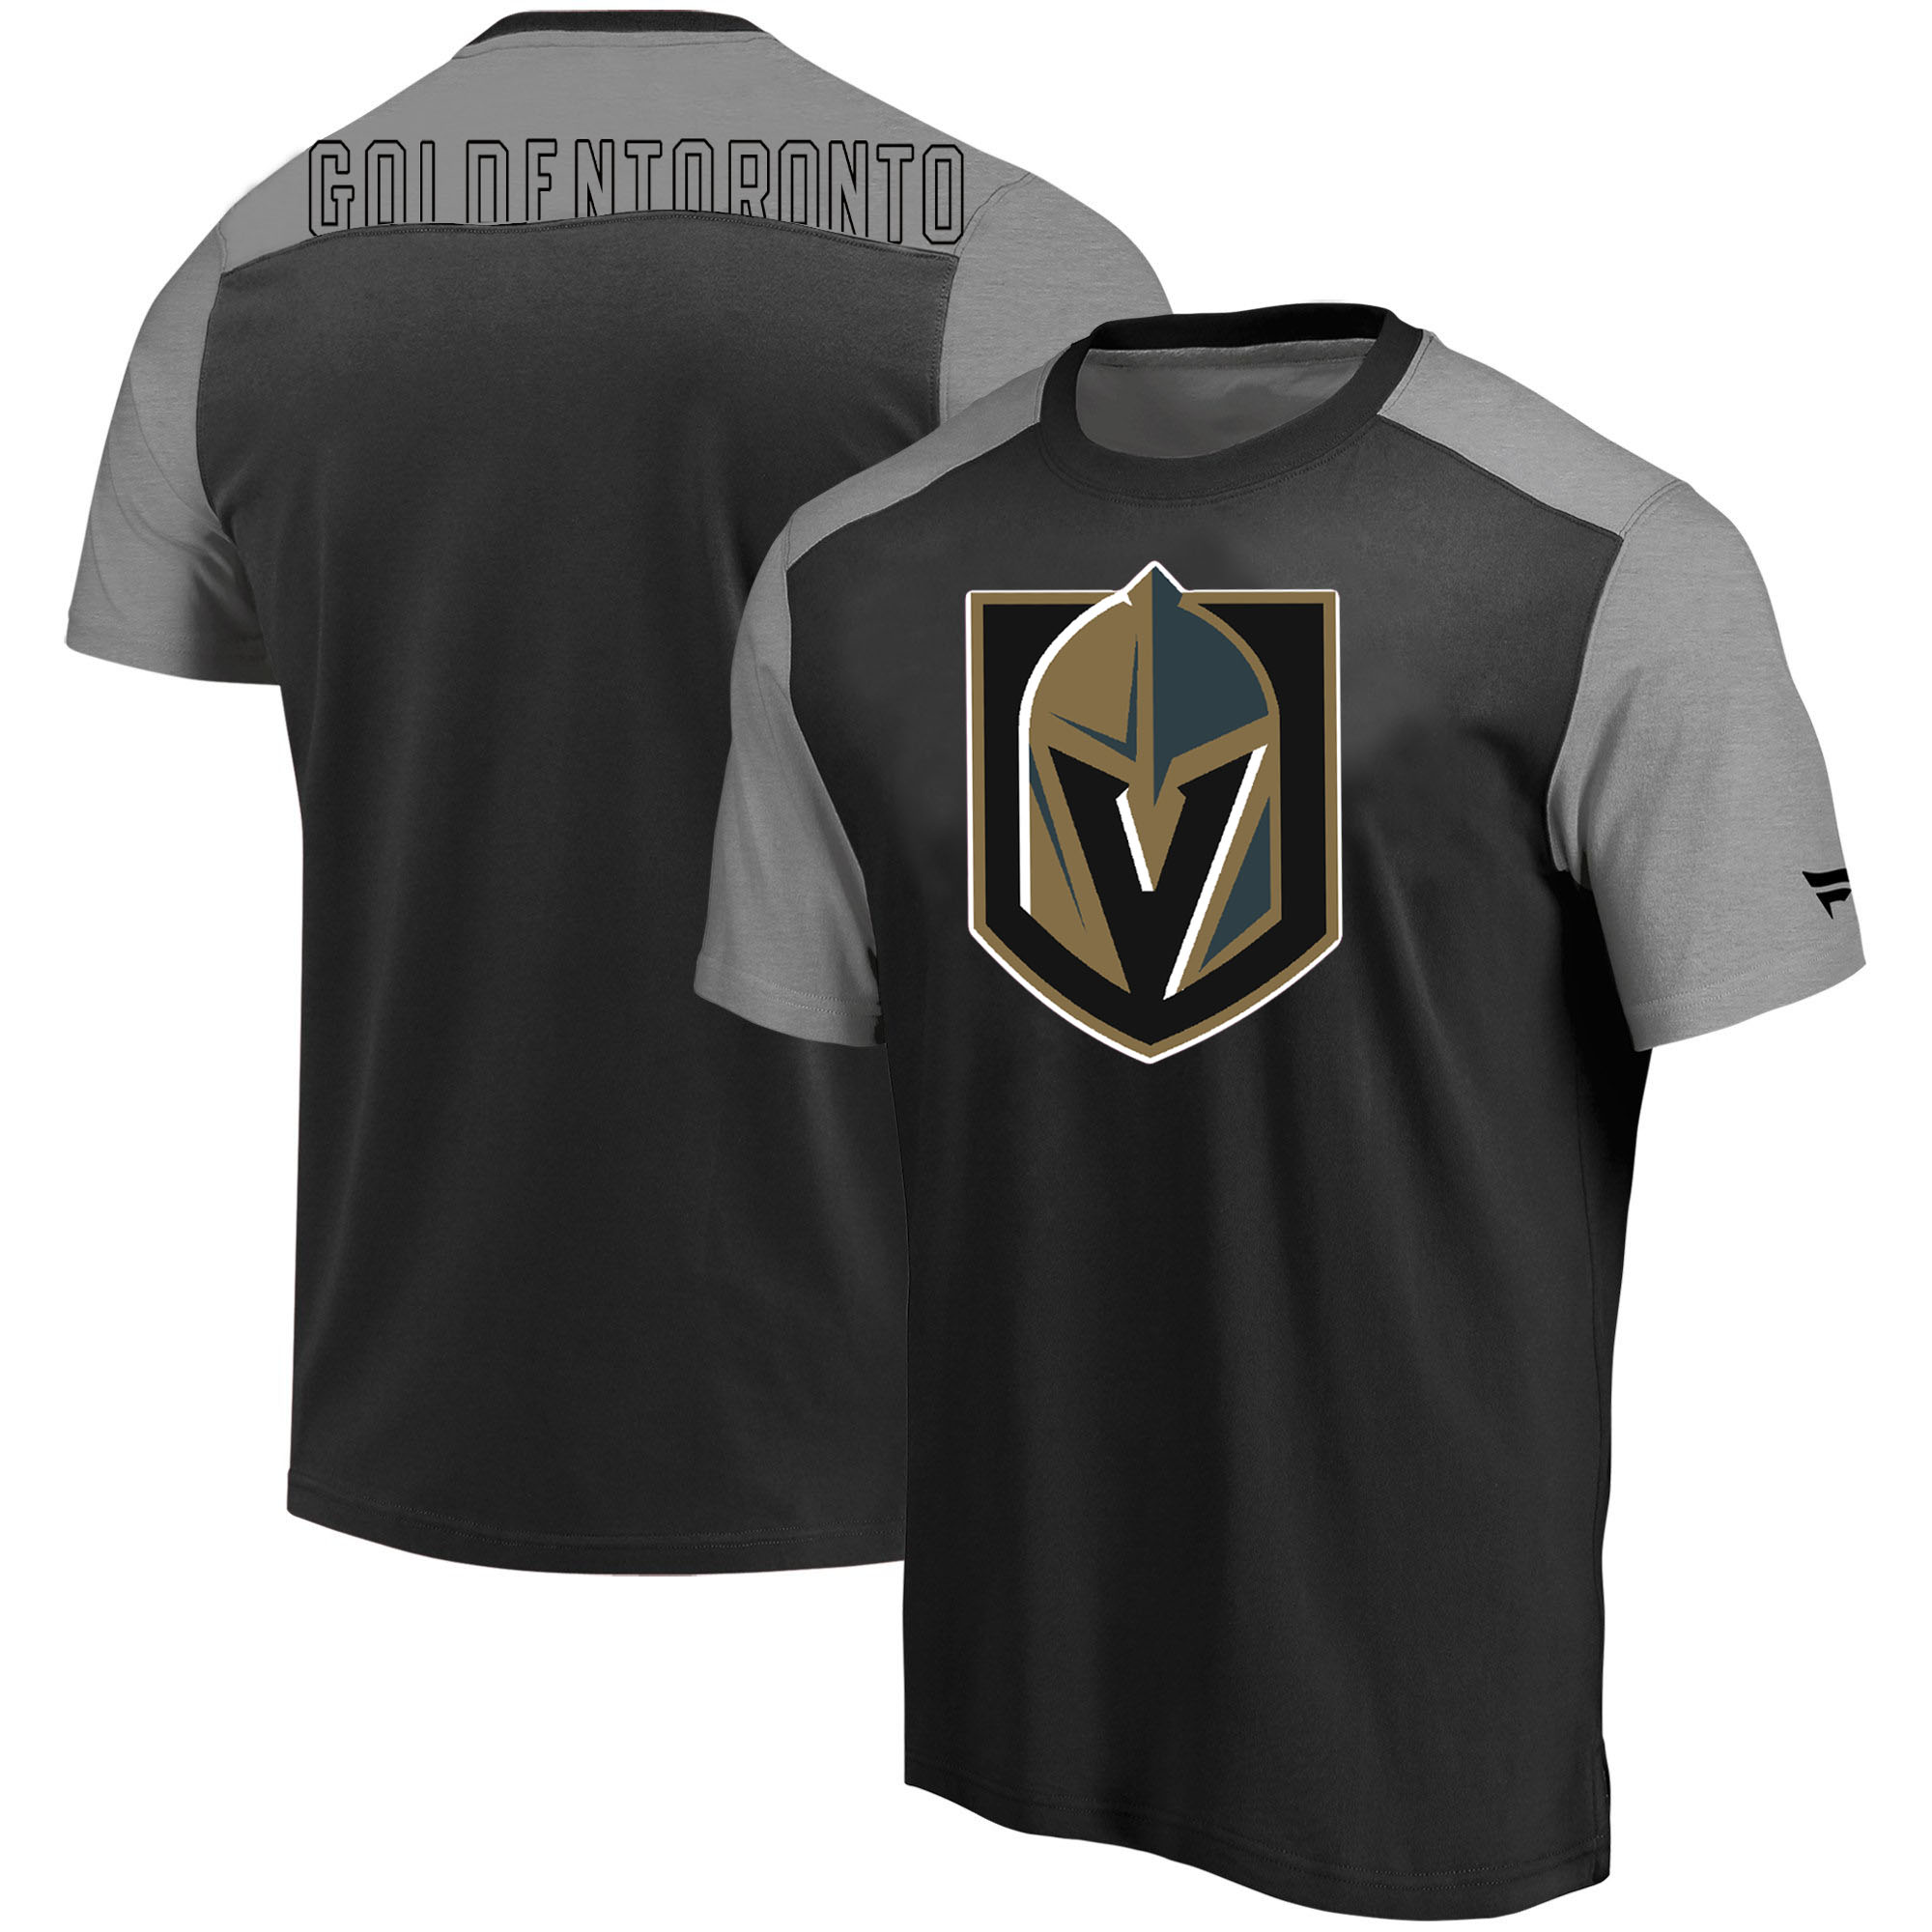 Vegas Golden Knights Fanatics Branded Iconic Blocked T-Shirt Black Heathered Gray